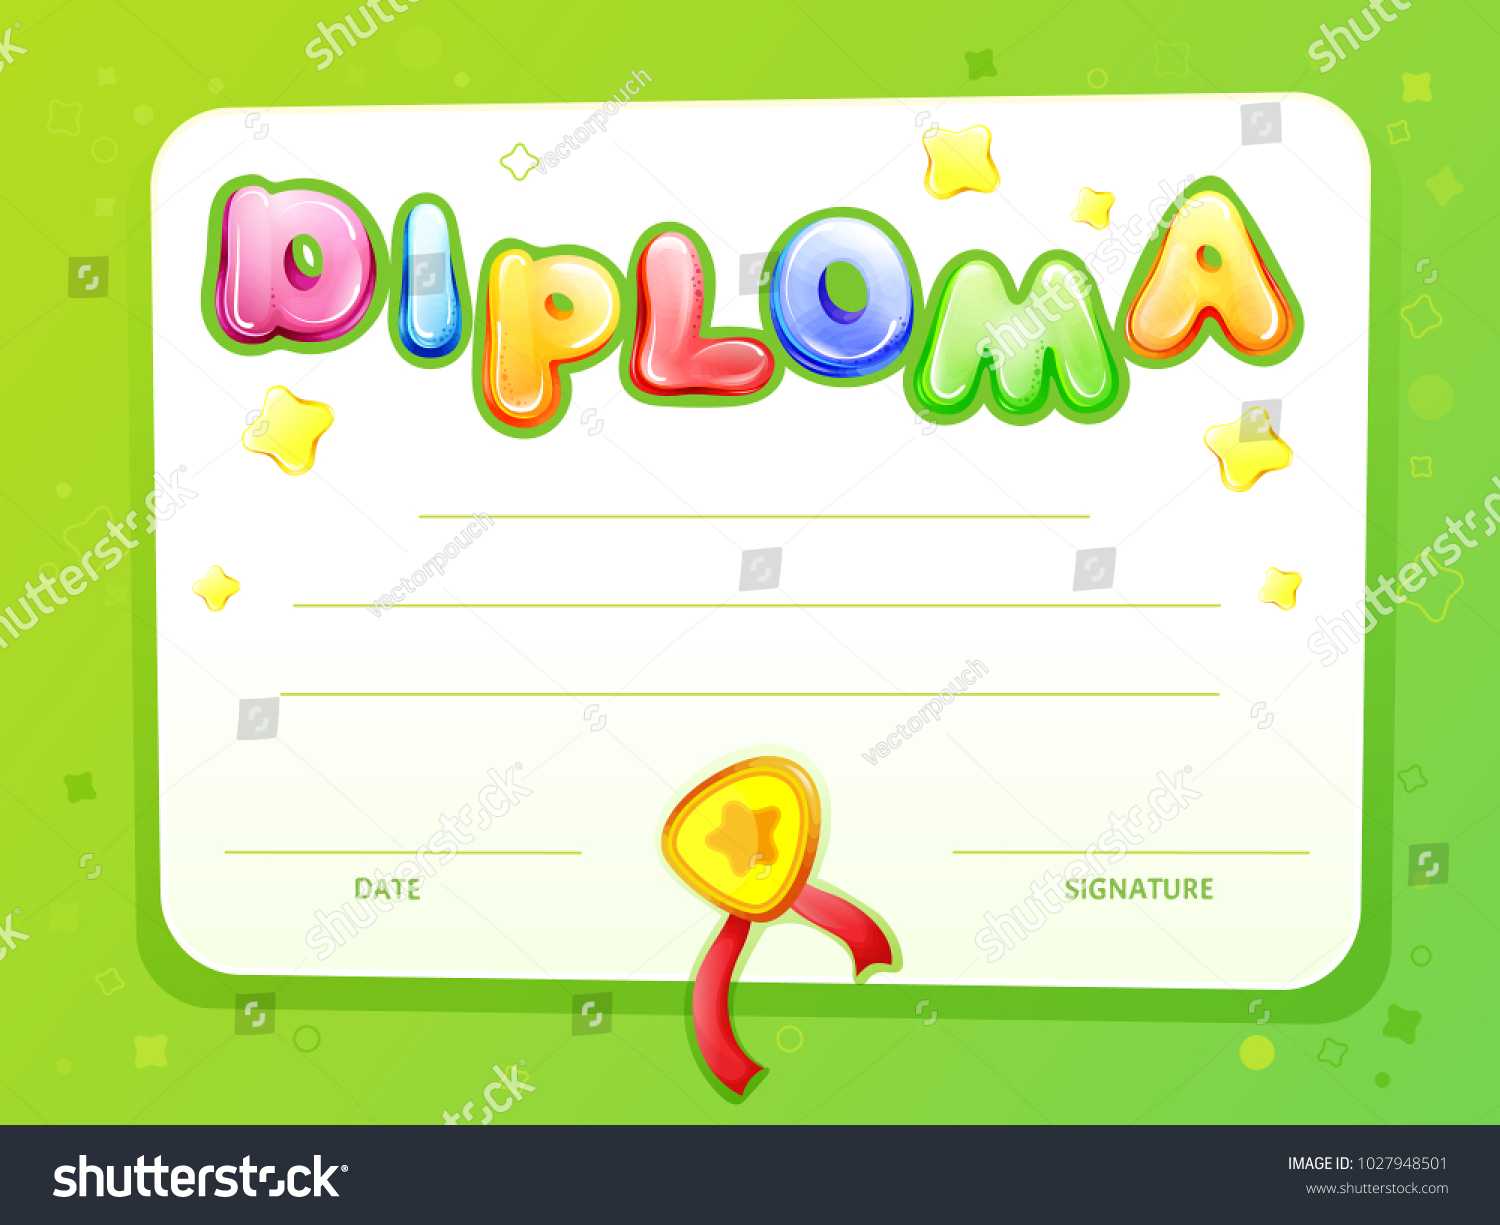 Стоковая Векторная Графика «Cartoon Kids Certificate Diploma With Certificate Of Achievement Template For Kids